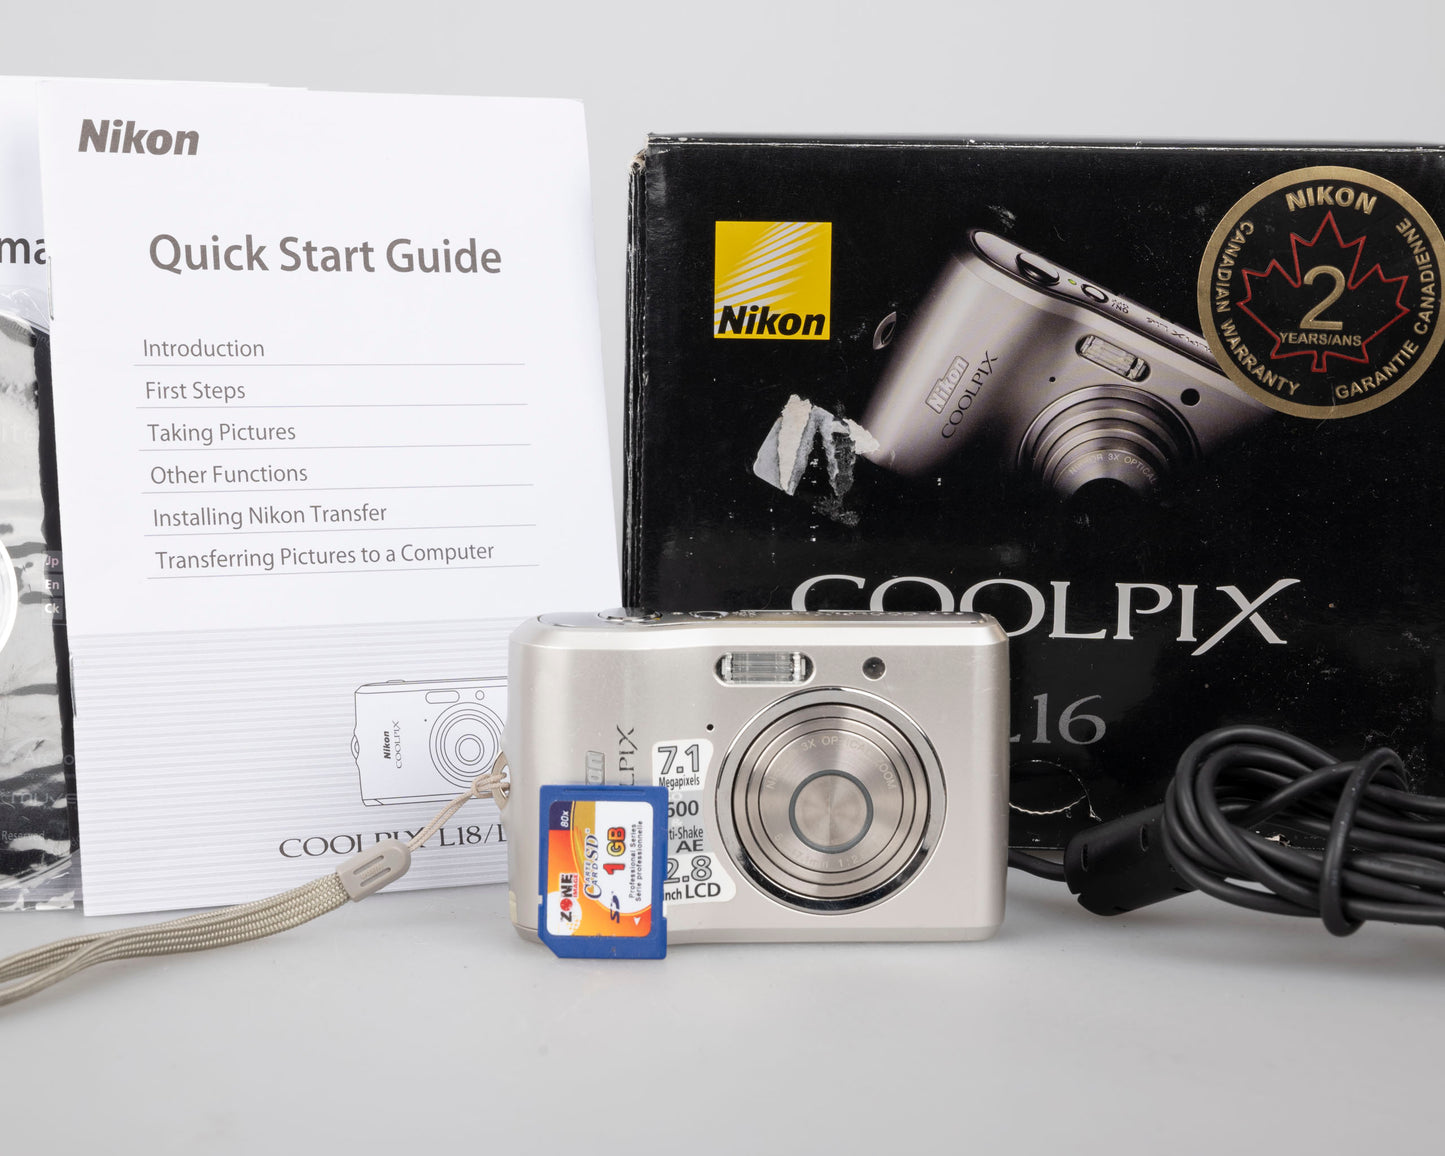 Nikon Coolpix L16 7.1 MP CCD sensor digicam w/ 1GB SD card + original box and accessories (uses AA batteries)